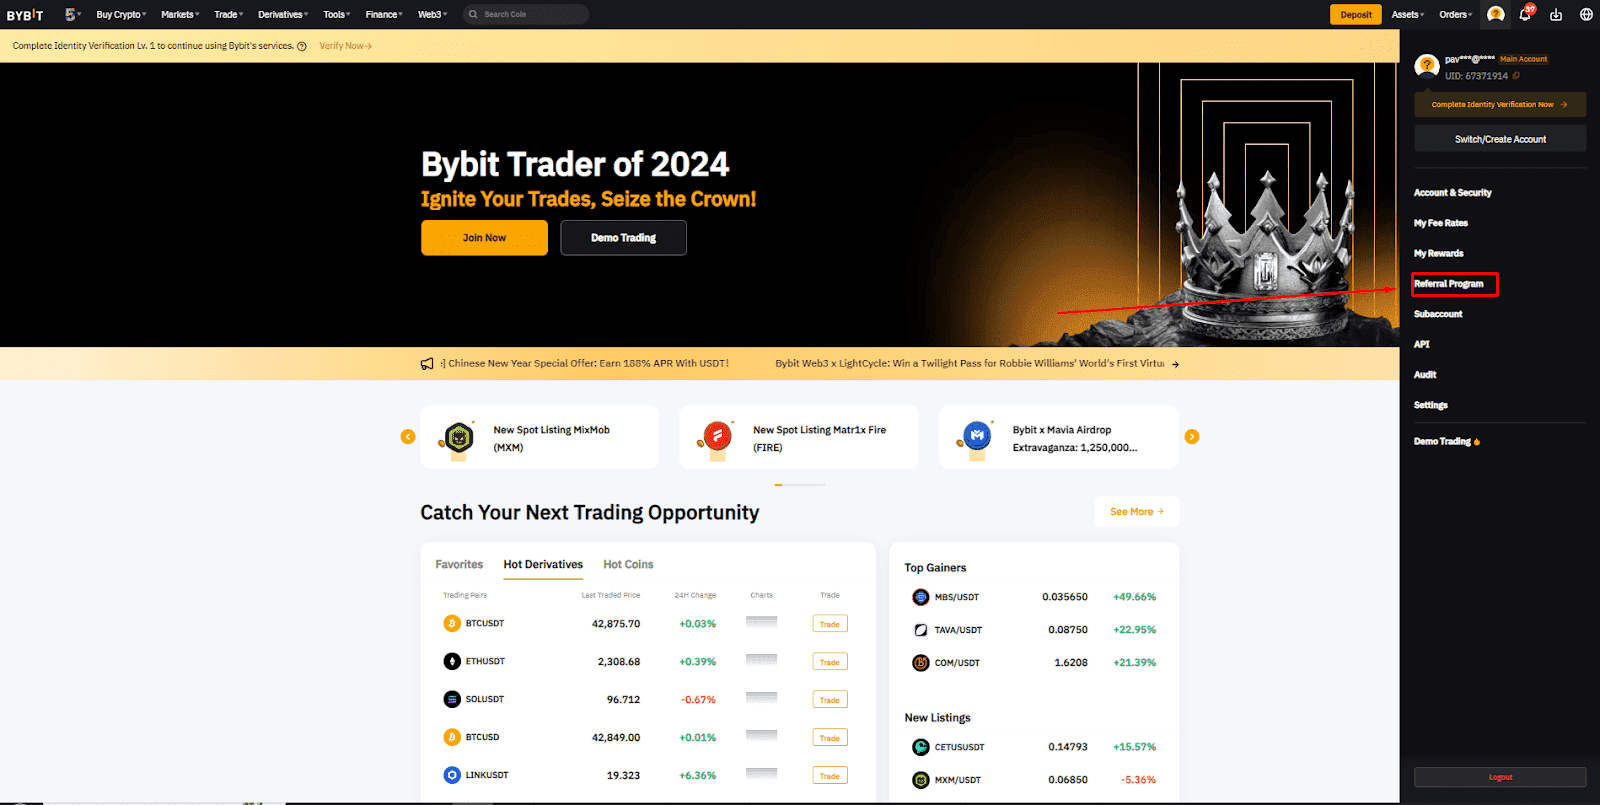 Bybit trader